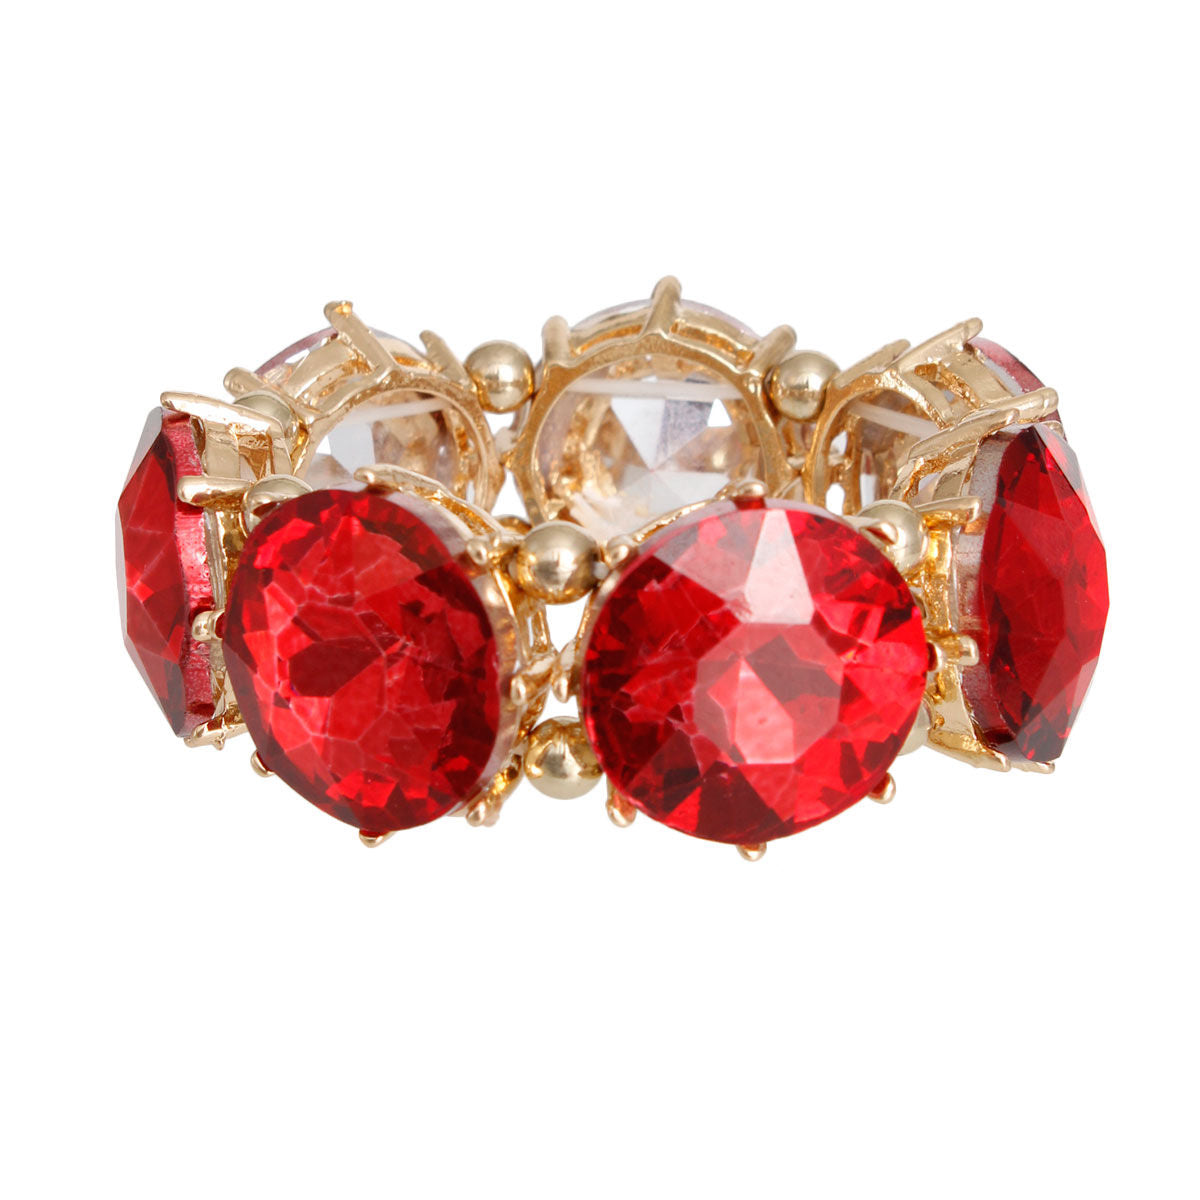 Red Round Crystal Stretchy Bracelet